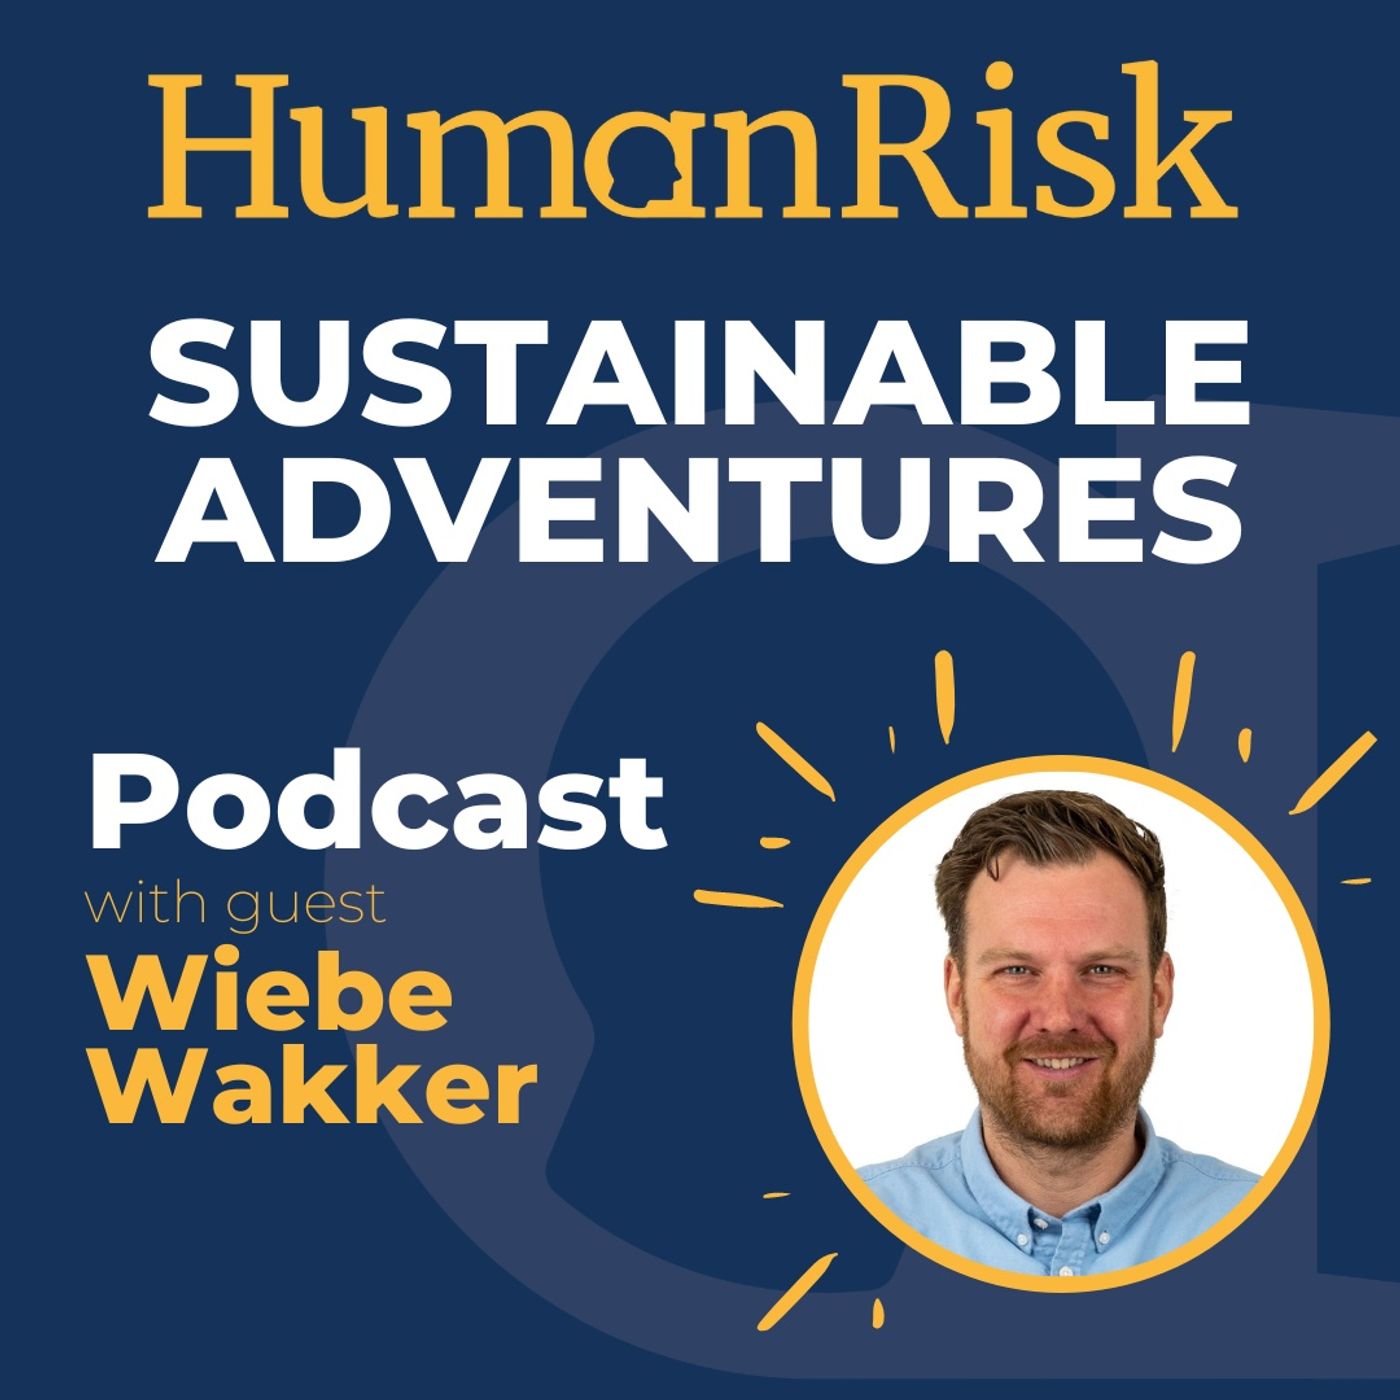 Wiebe Wakker on Sustainable Adventures Image